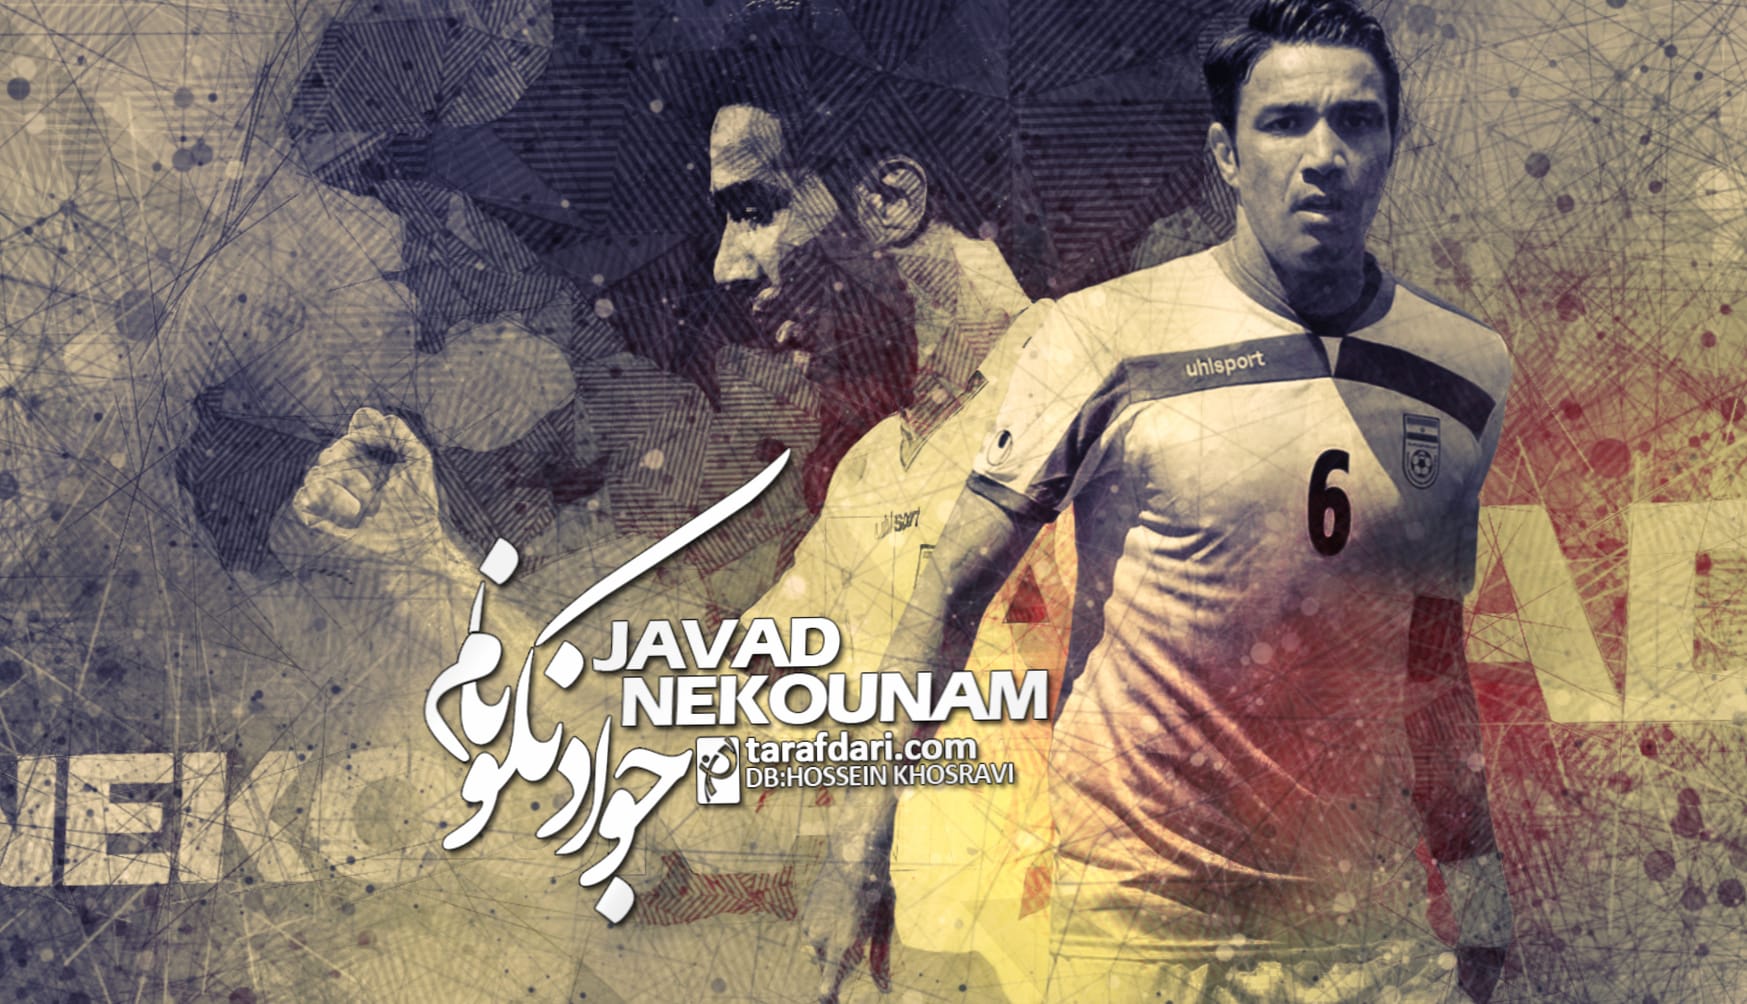 Javad Nekounam wallpapers HD quality